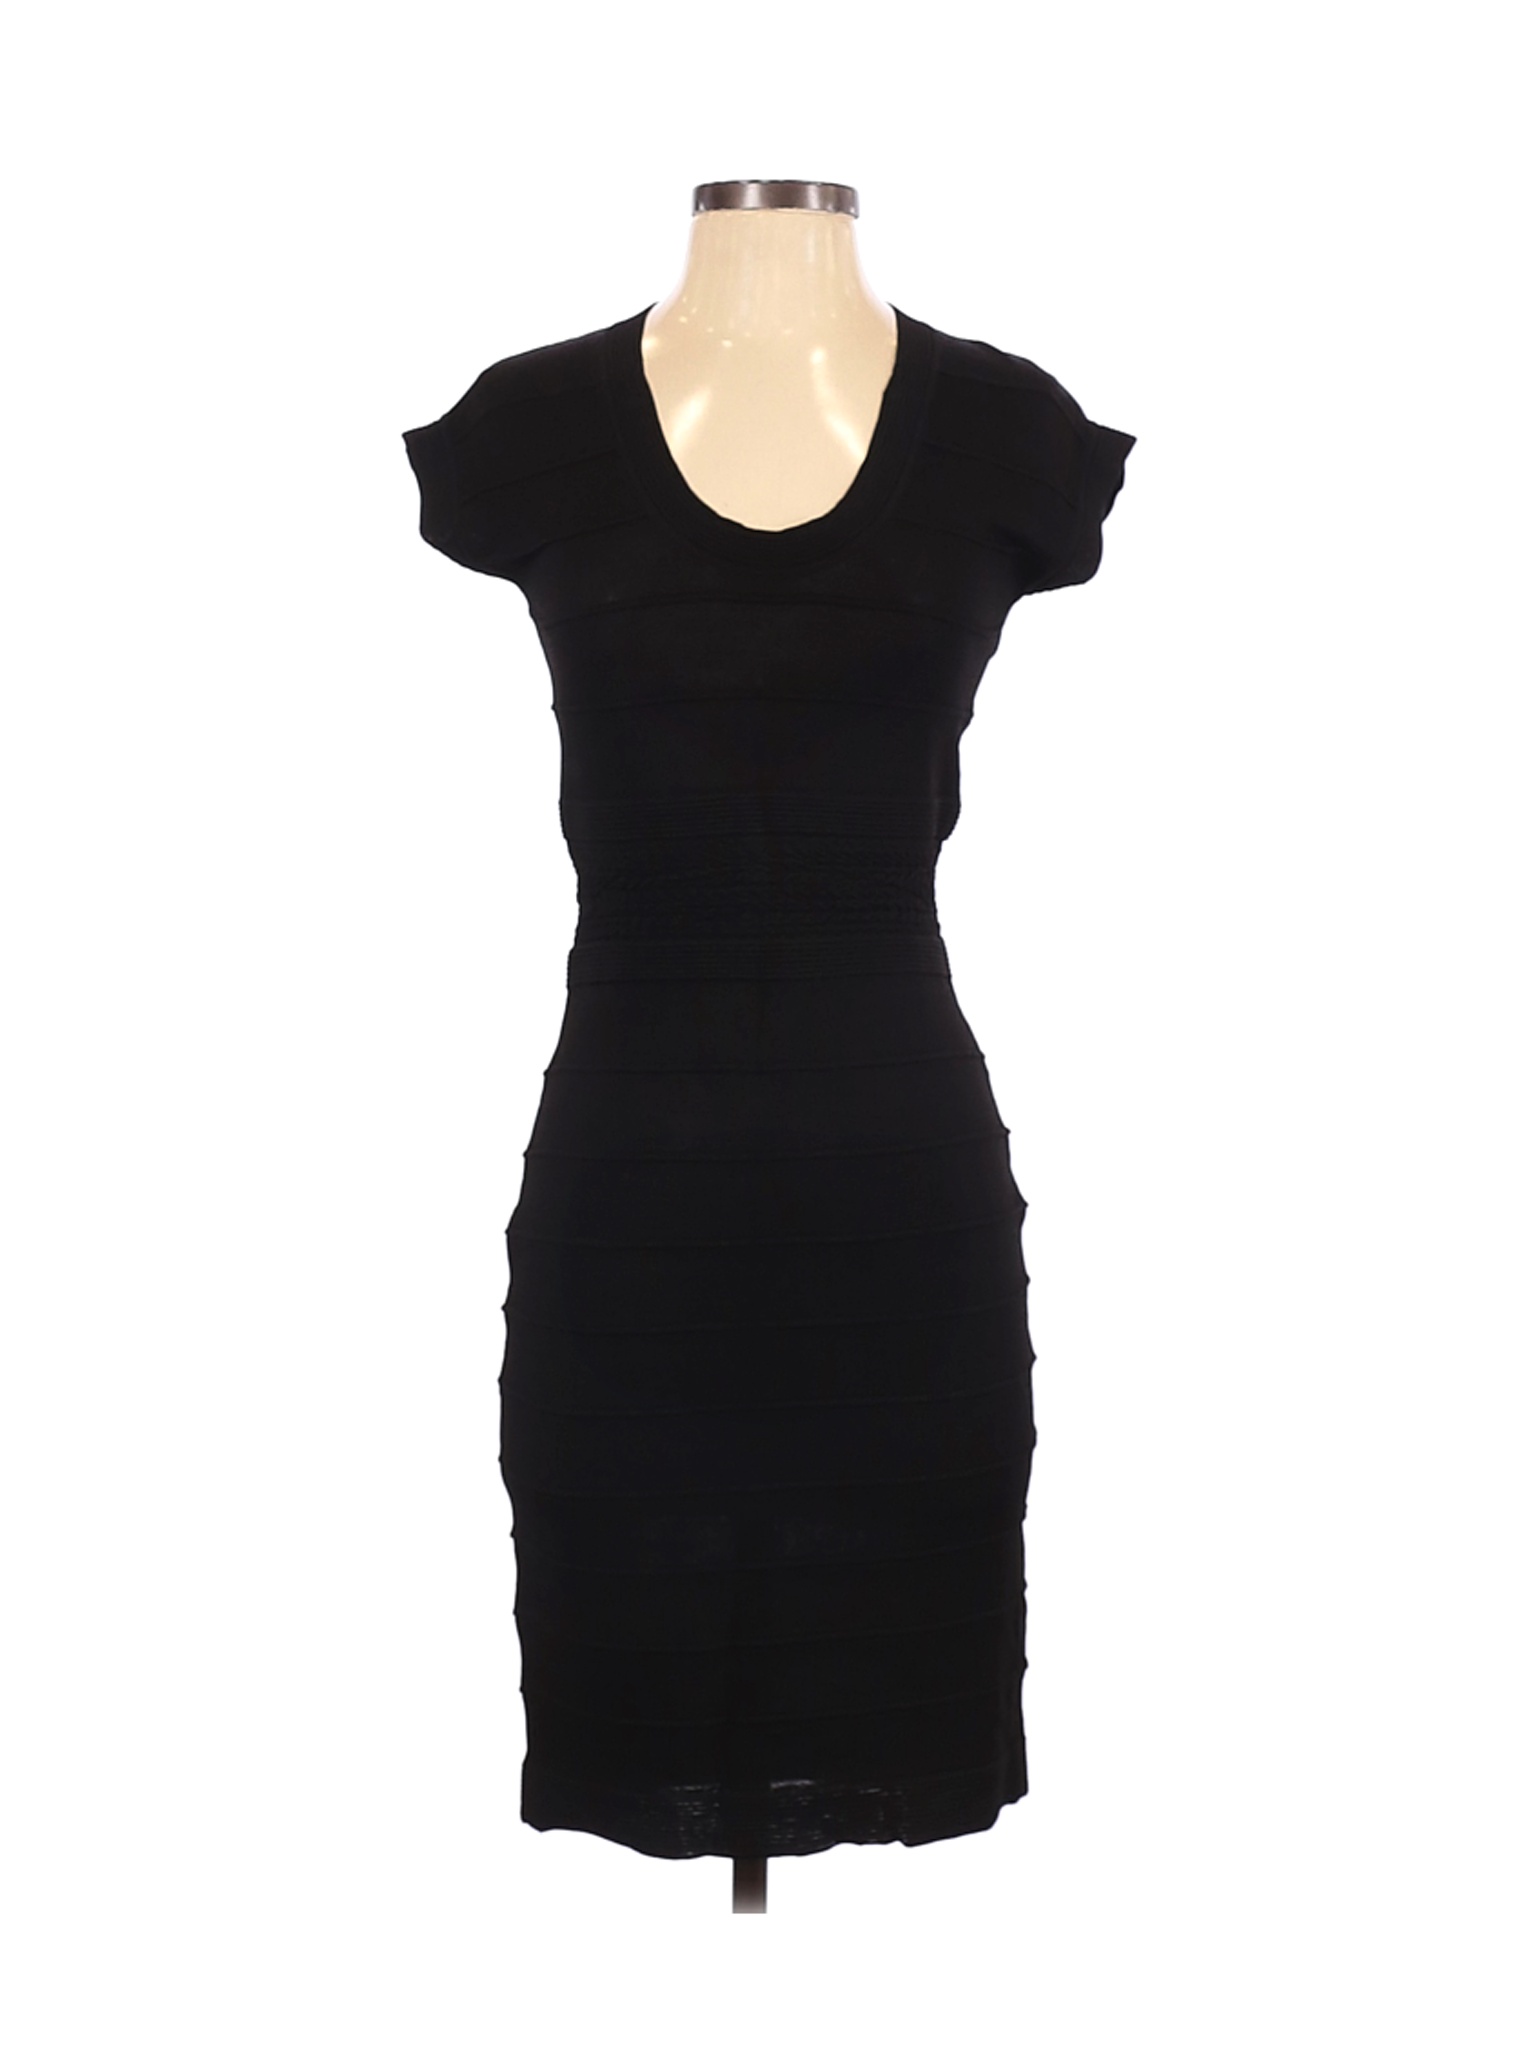 Max Studio Women Black Cocktail Dress S | eBay